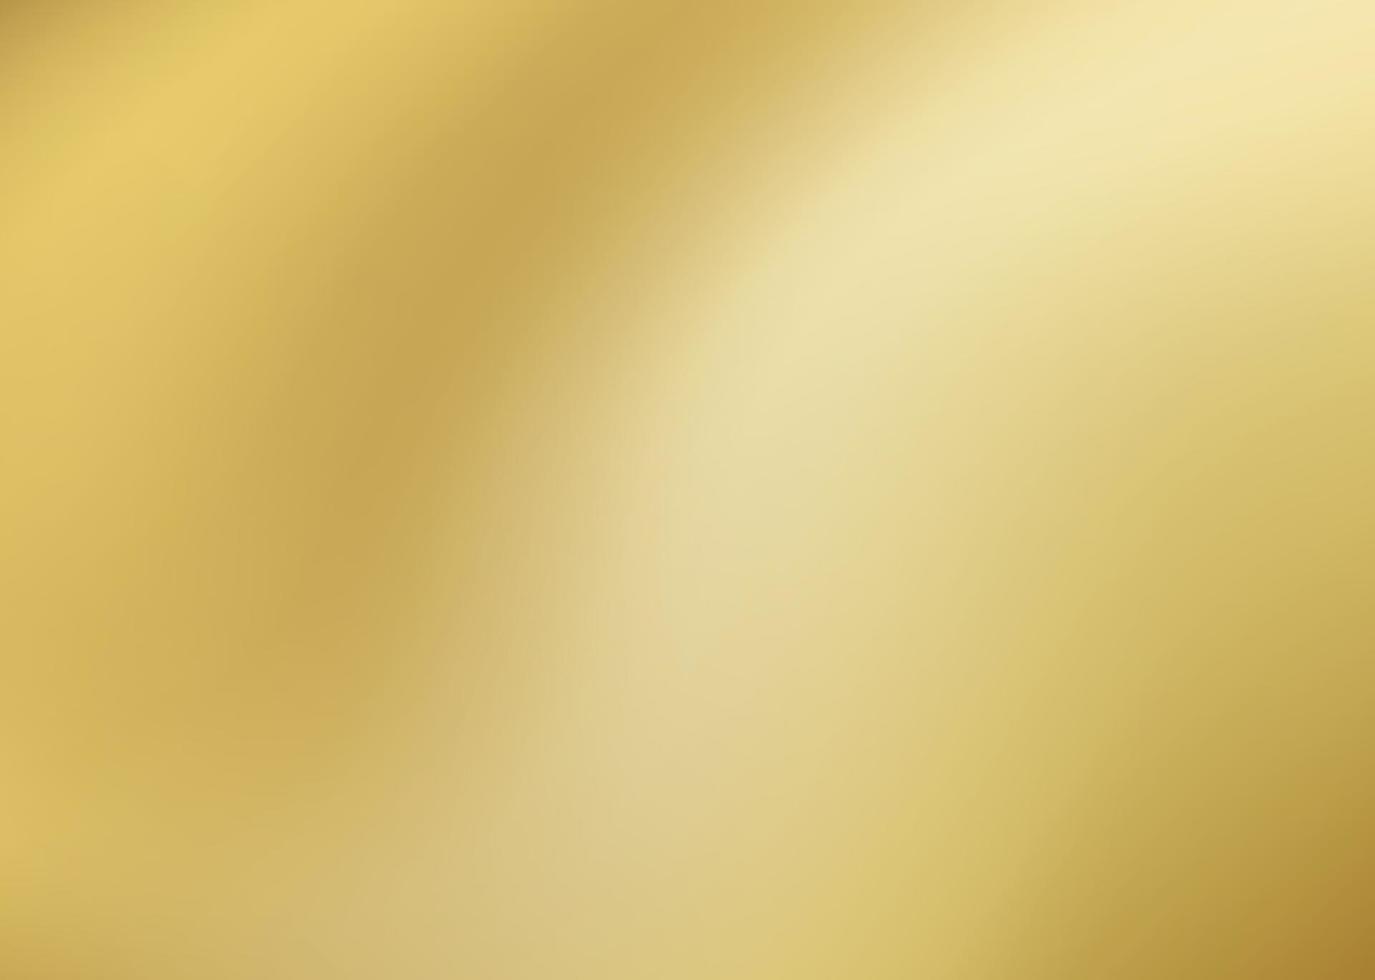 Gold abstrakter Hintergrund mit Farbverlauf. Vektor-Illustration. vektor